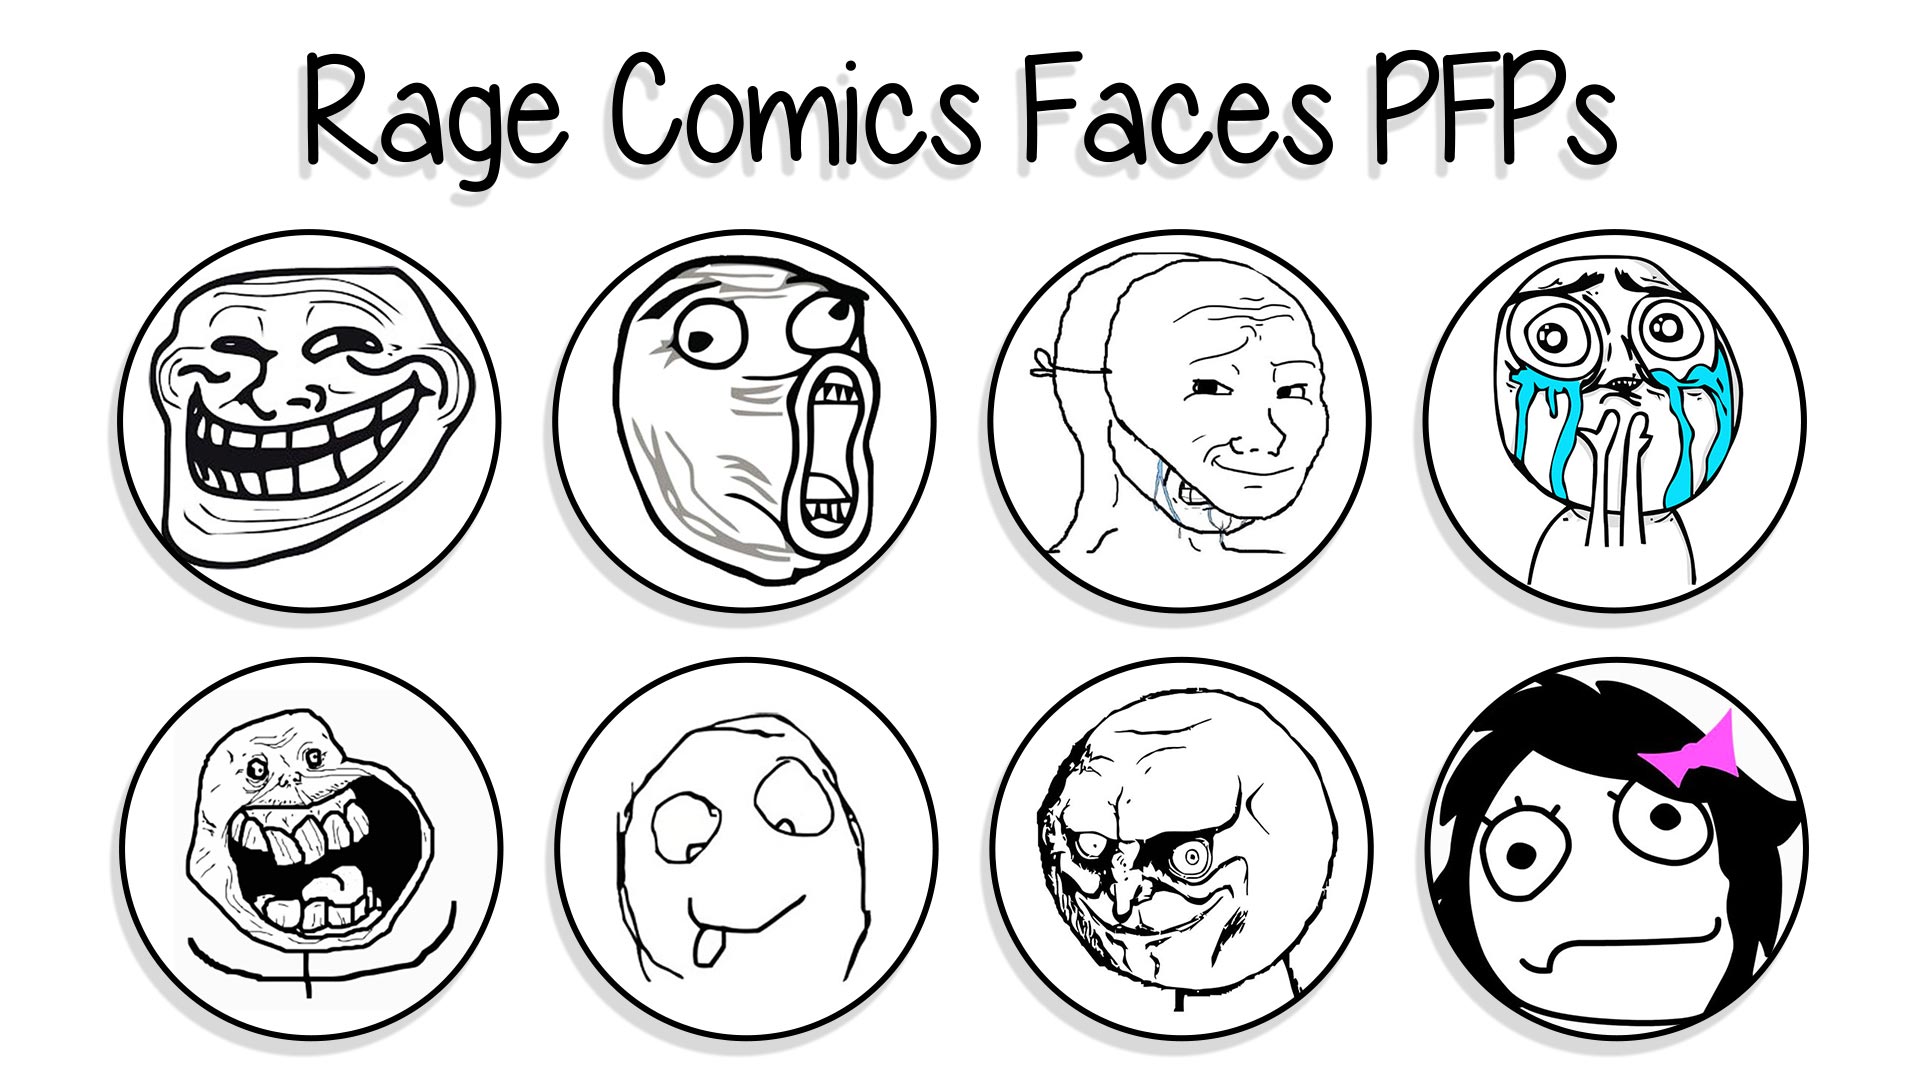 Rage Comics Faces PFP - Meme PFPs for Tiktok, Discord, IG etc.